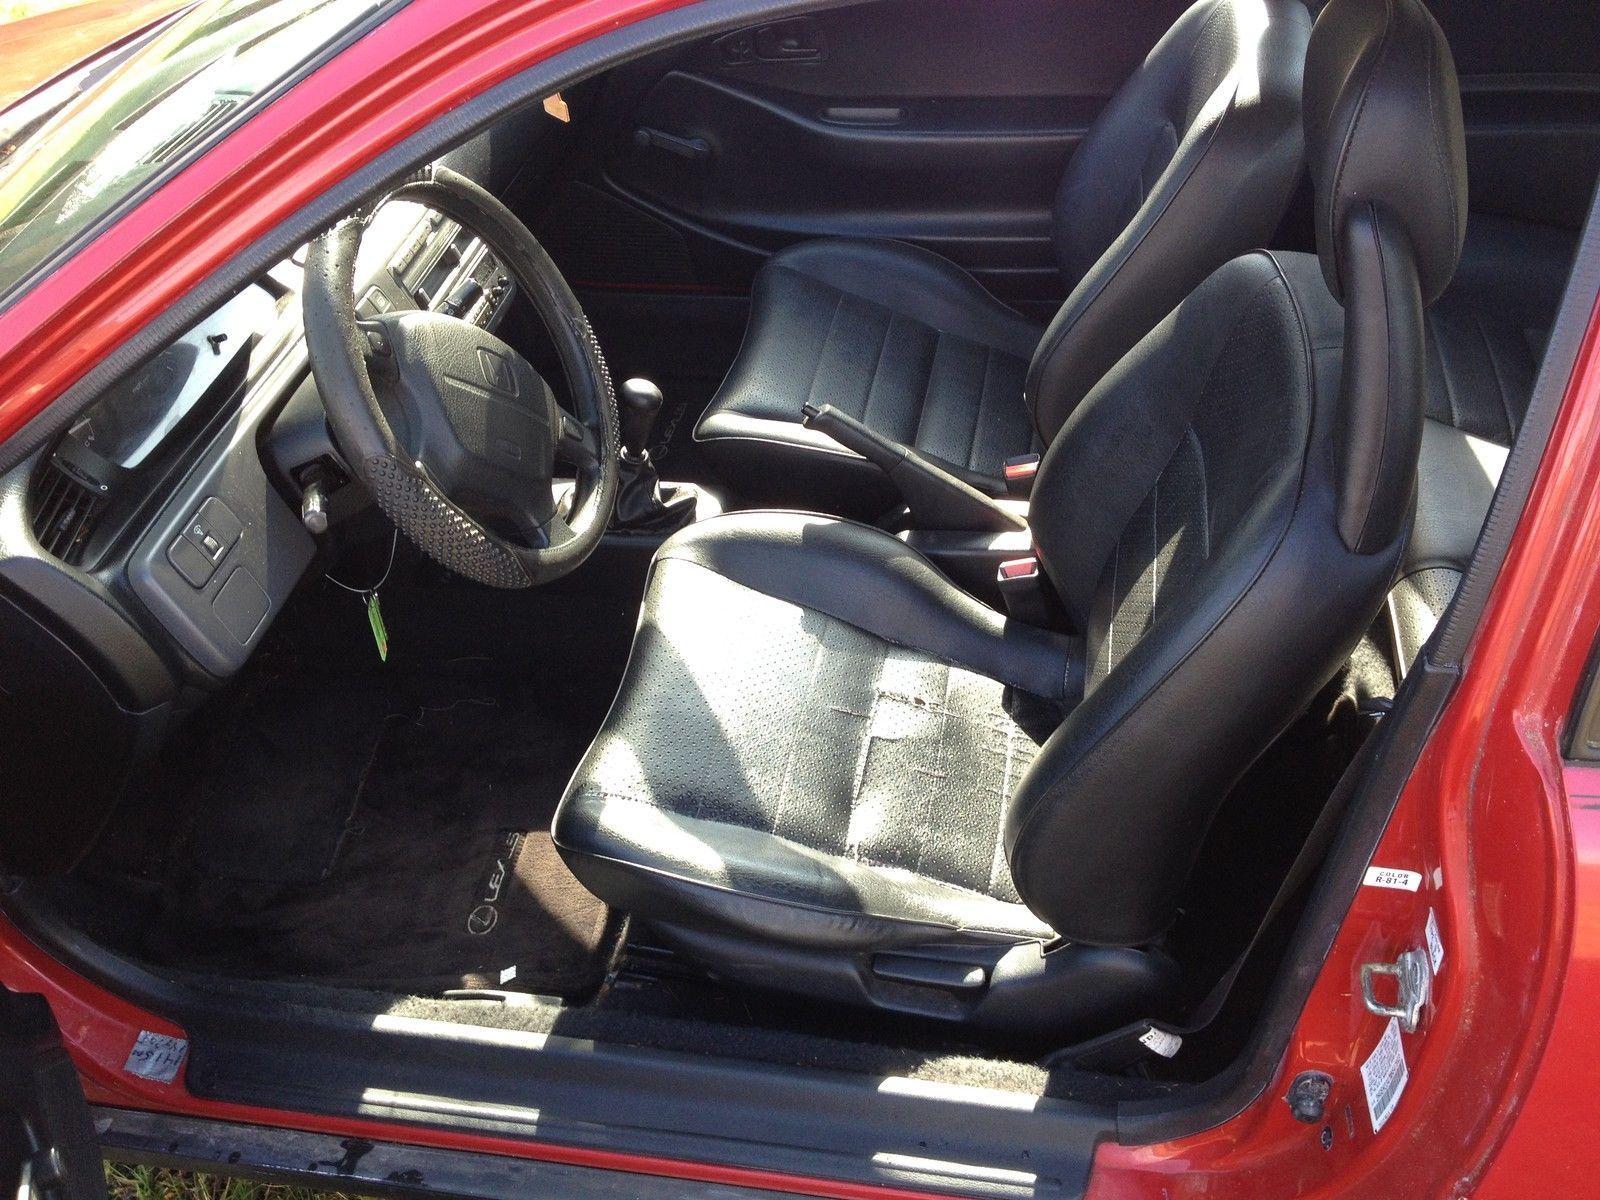 Honda Civic CX Hatchback Bubble back 5 speed d15 eg